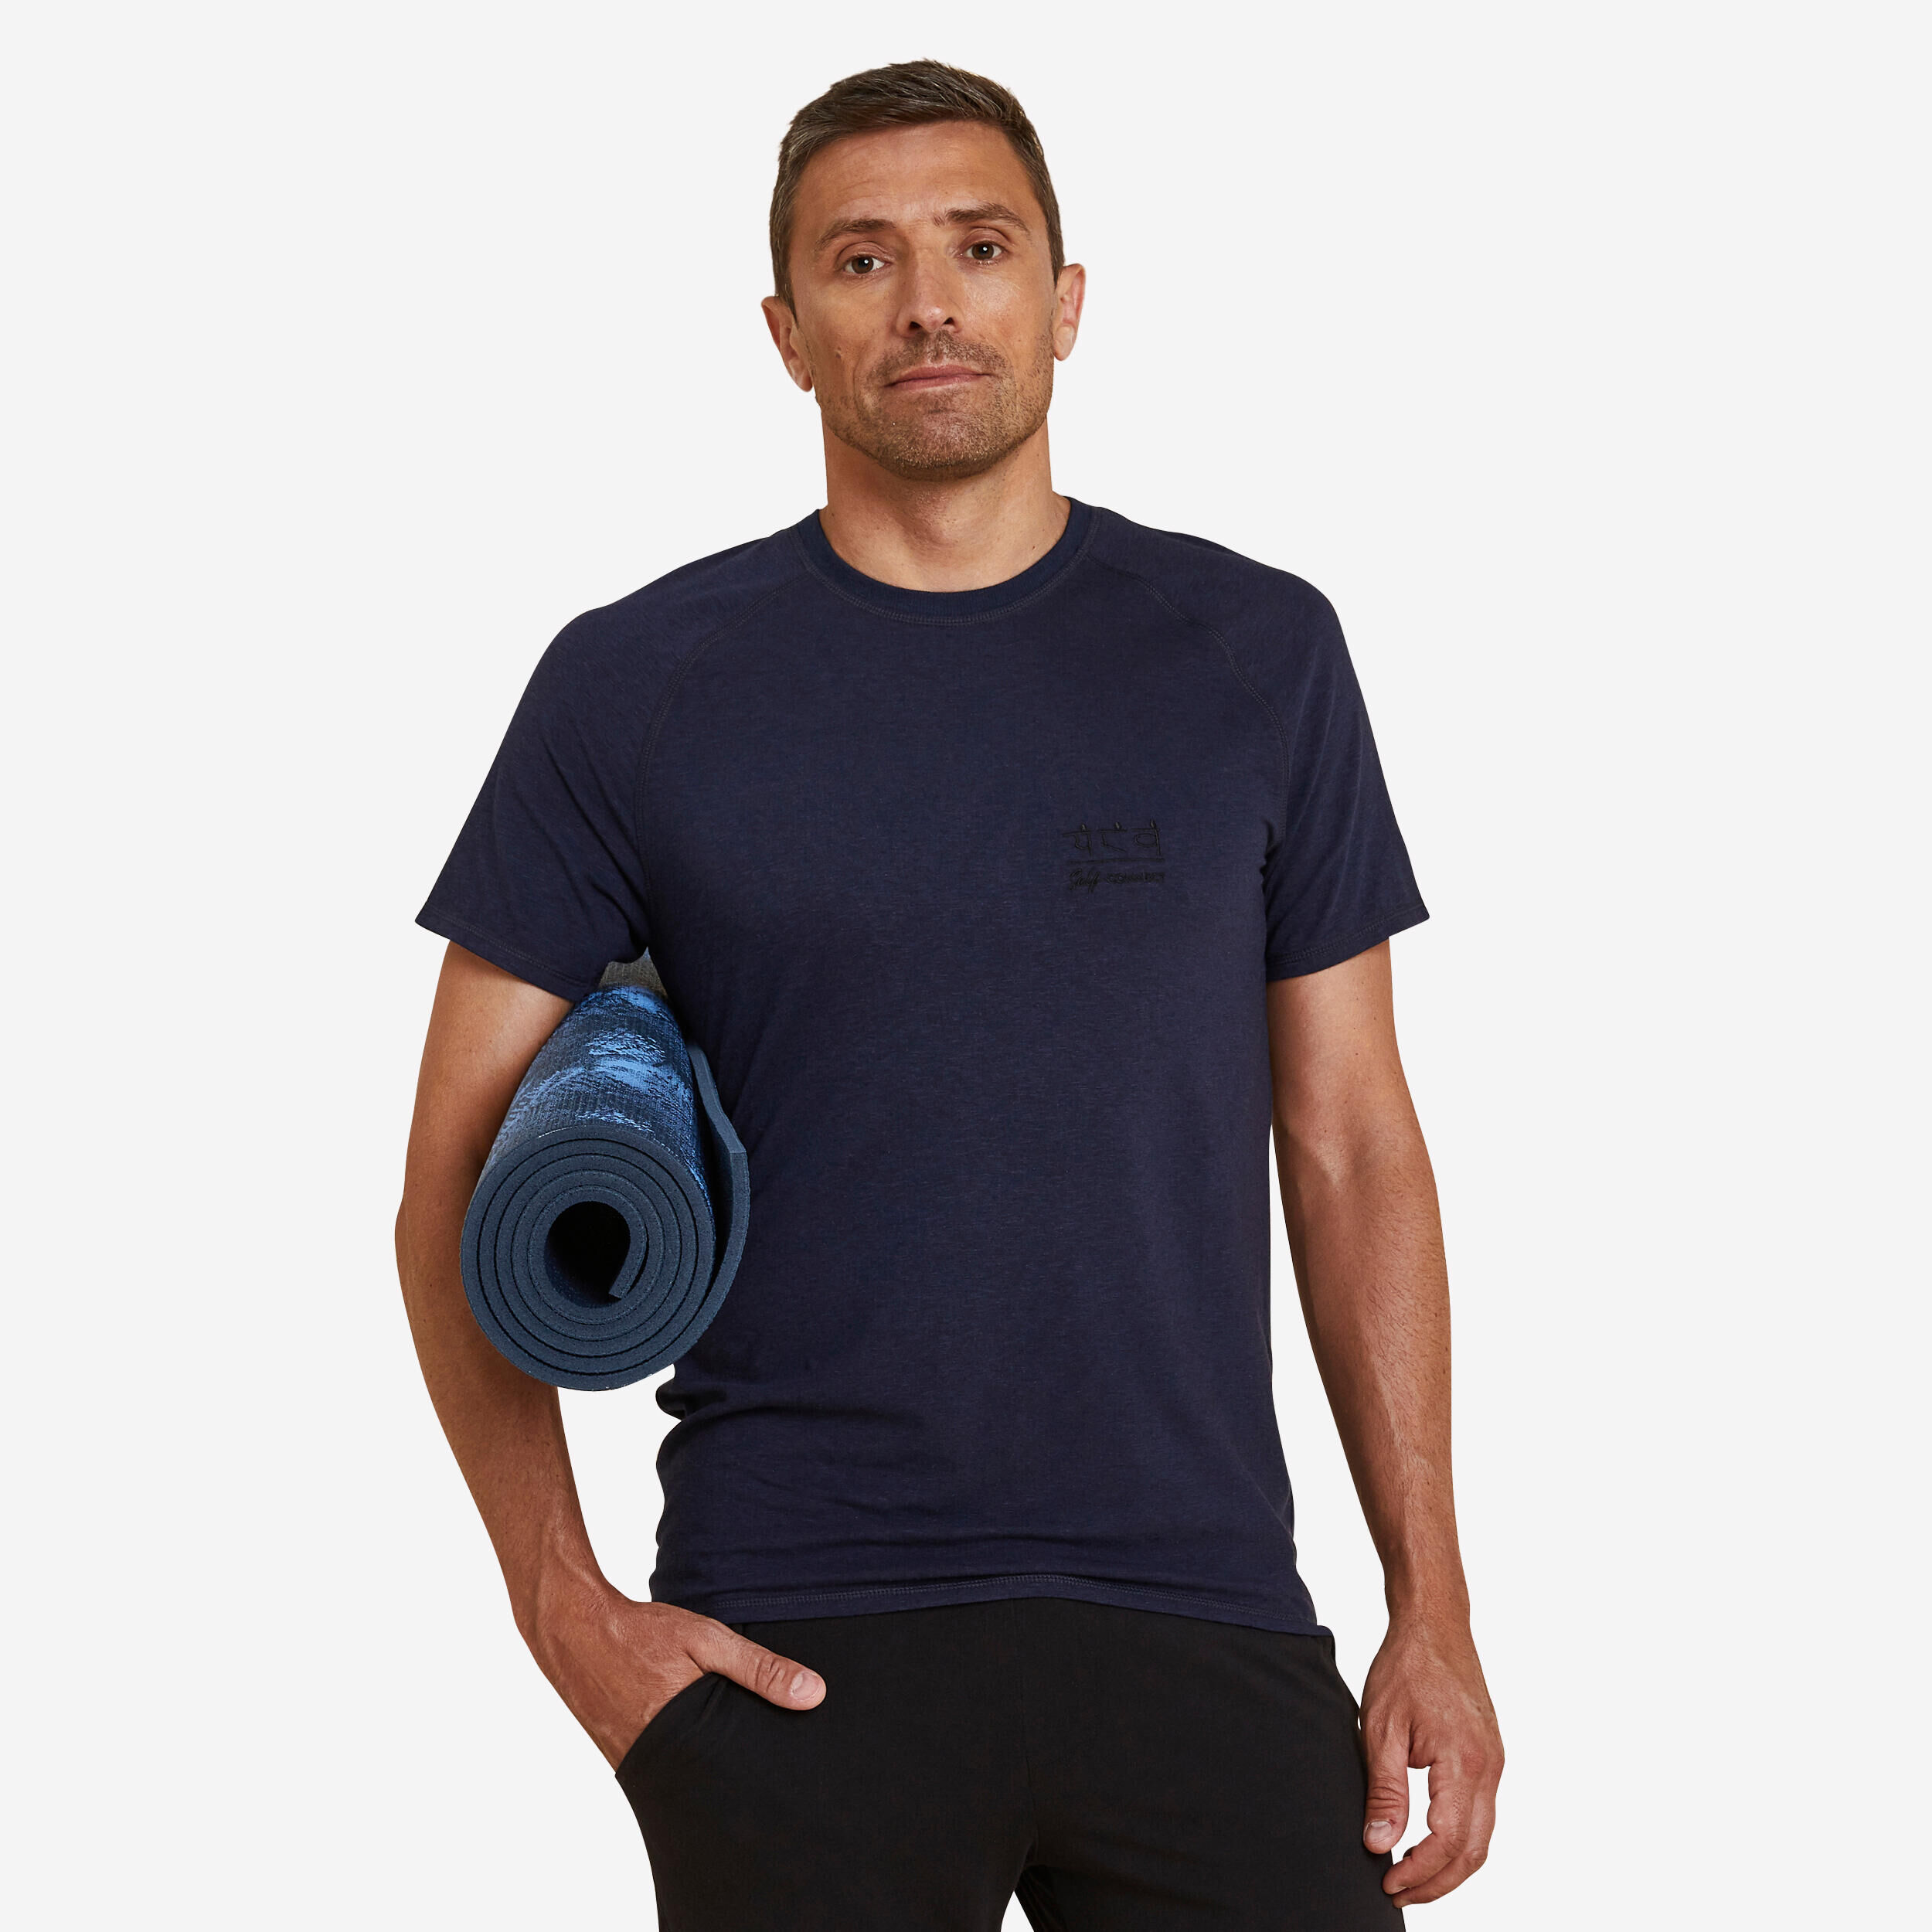 KIMJALY Men's Short-Sleeved Gentle Yoga T-Shirt - Navy Blue